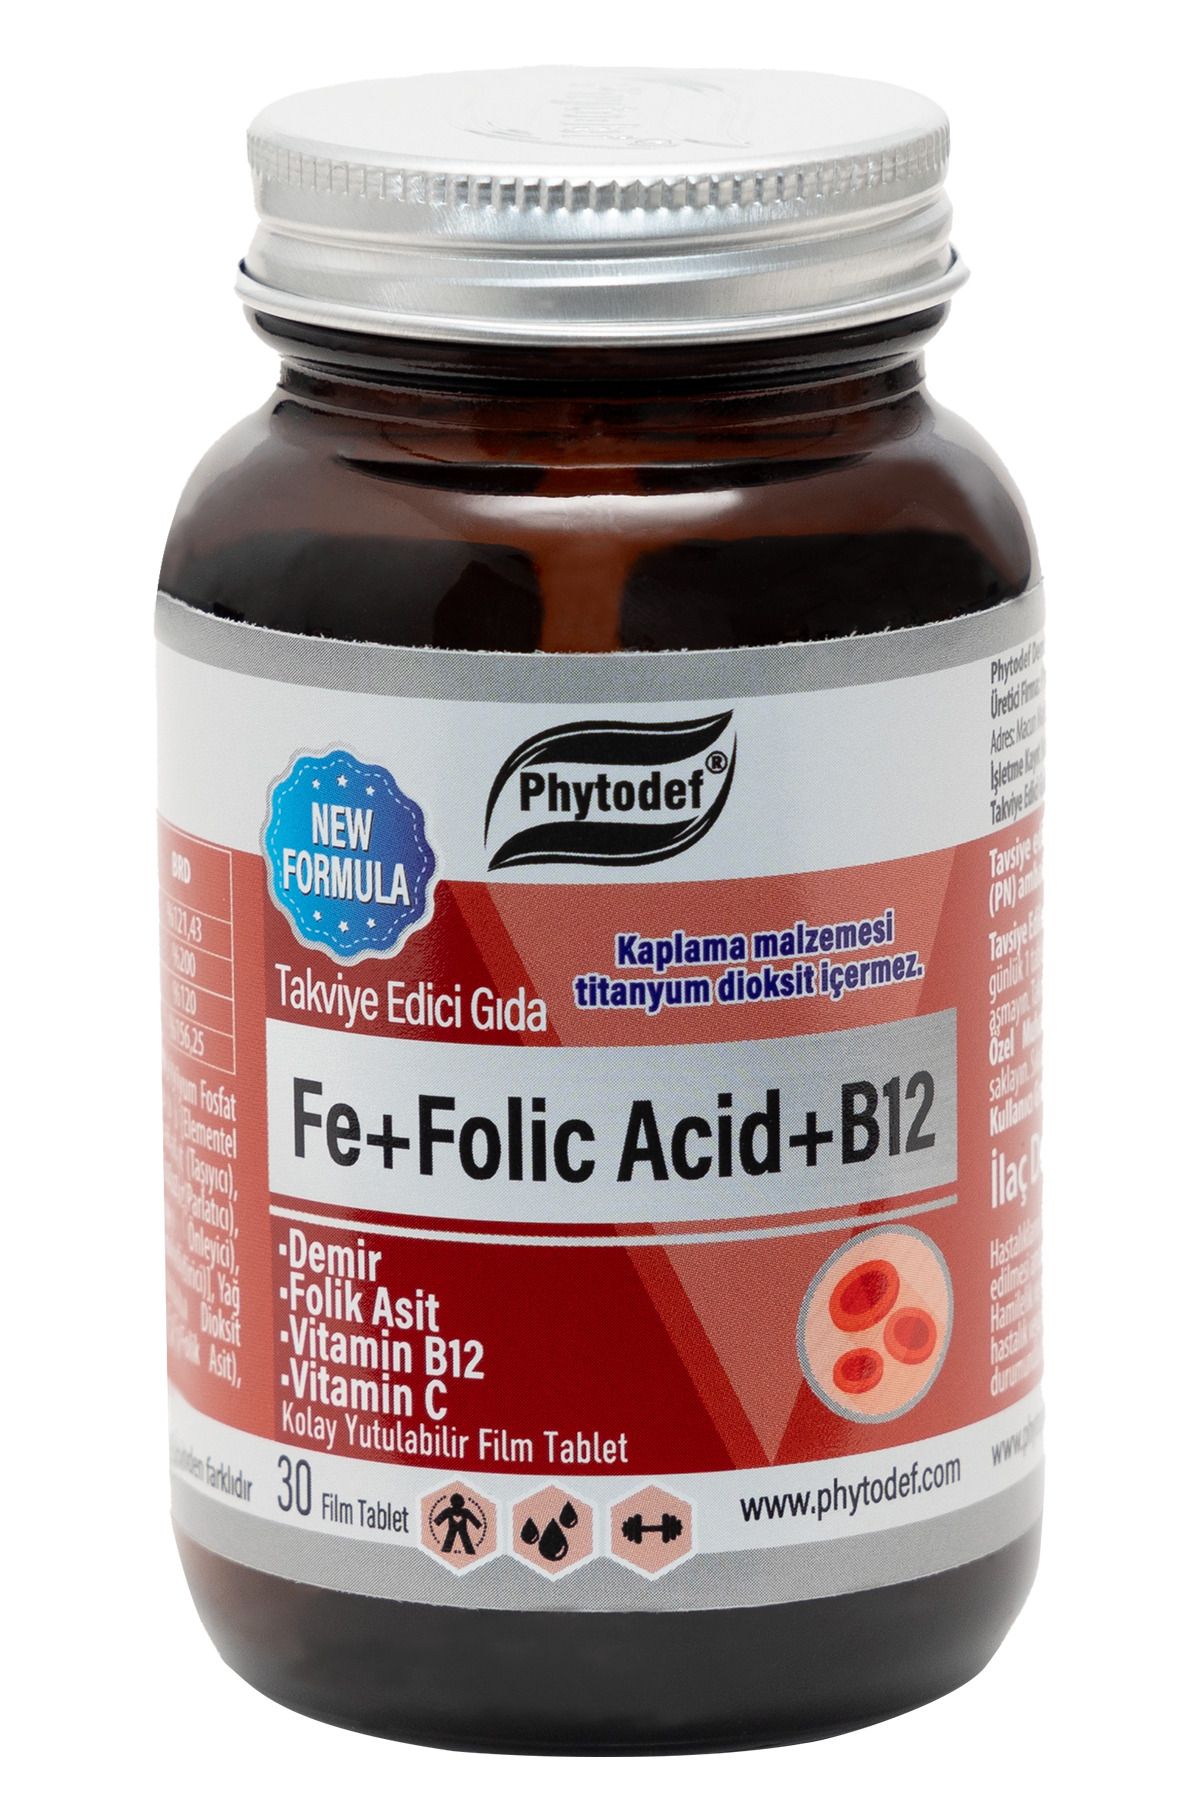 Phytodef Demir + Folik Asit + Vitamin B12 + Vitamin C - 30 Tablet.